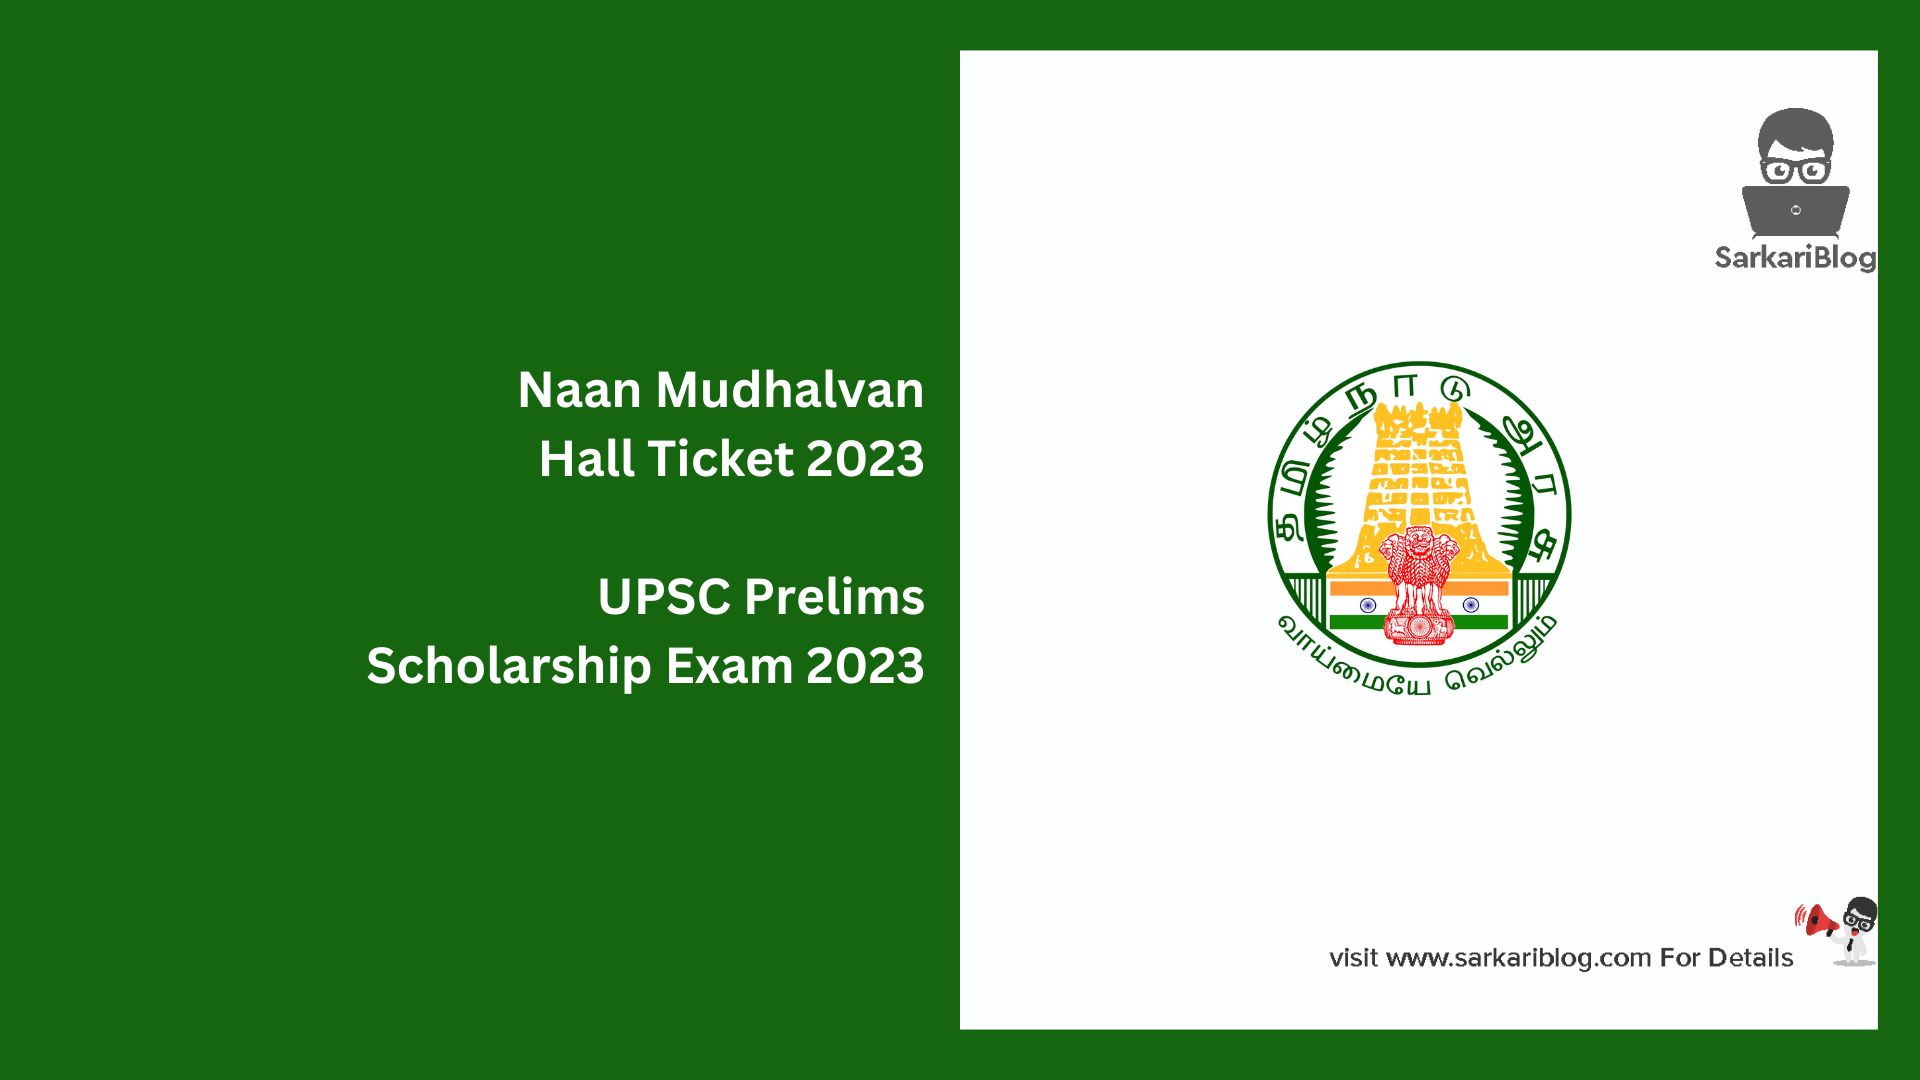 Naan Mudhalvan Hall Ticket 2023